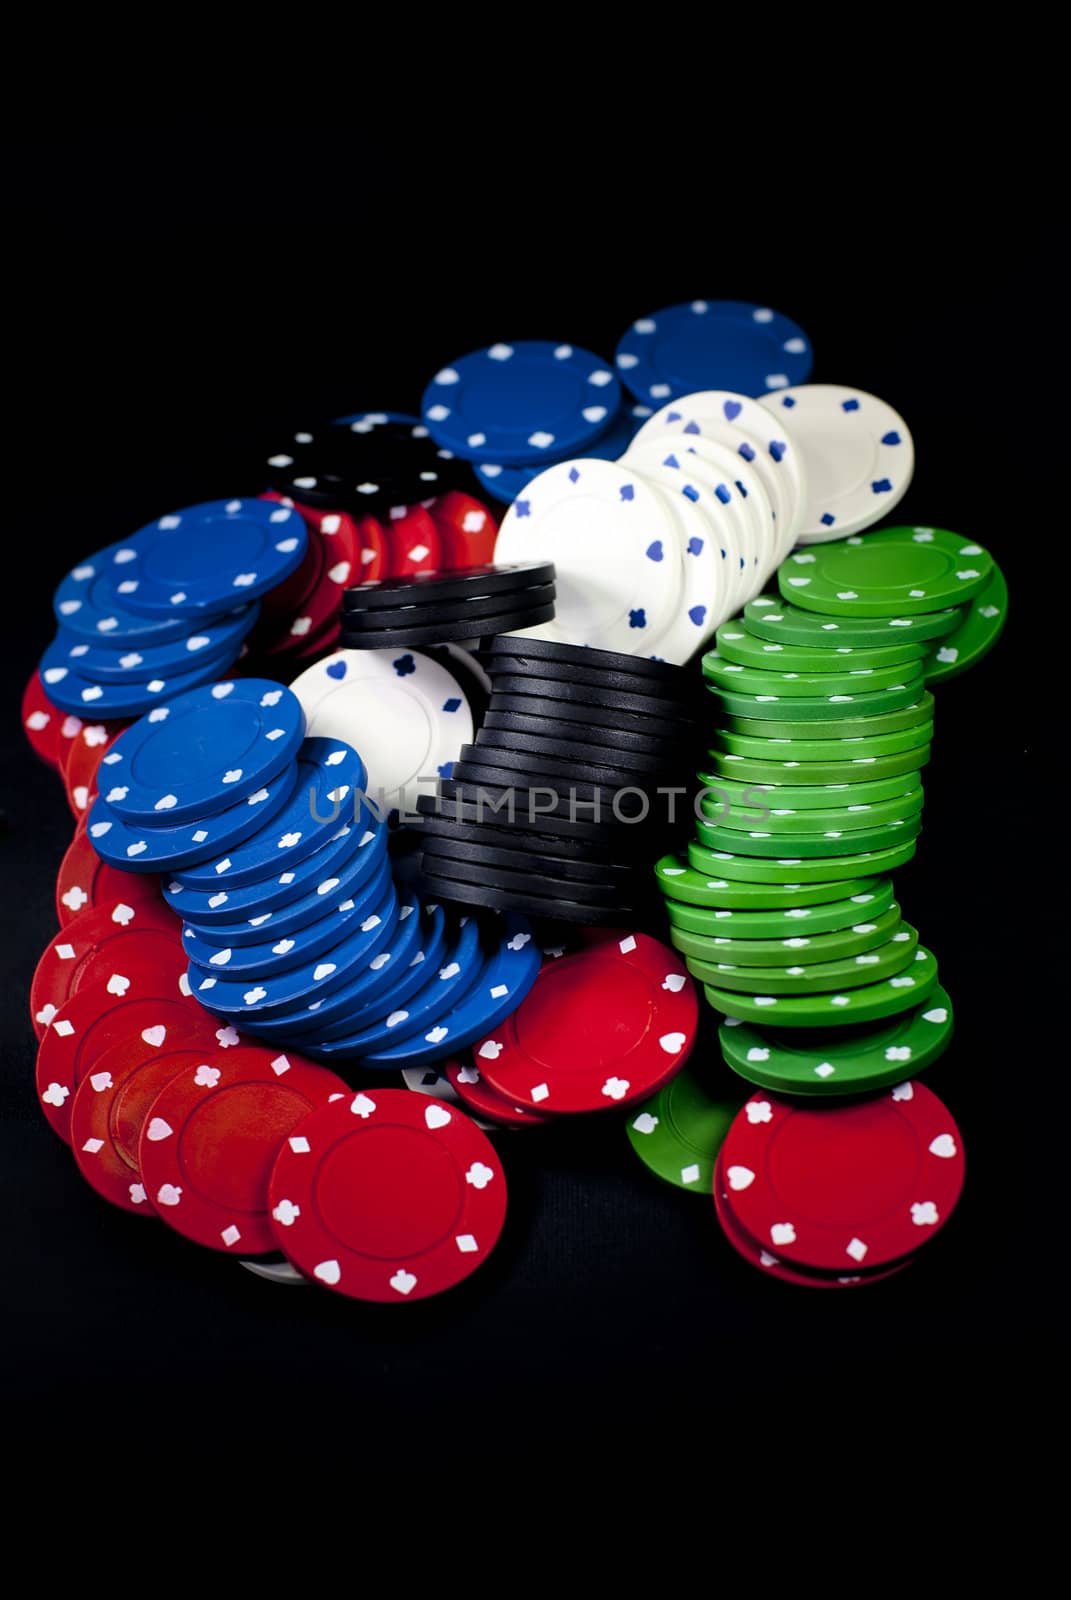 poker chips by gufoto